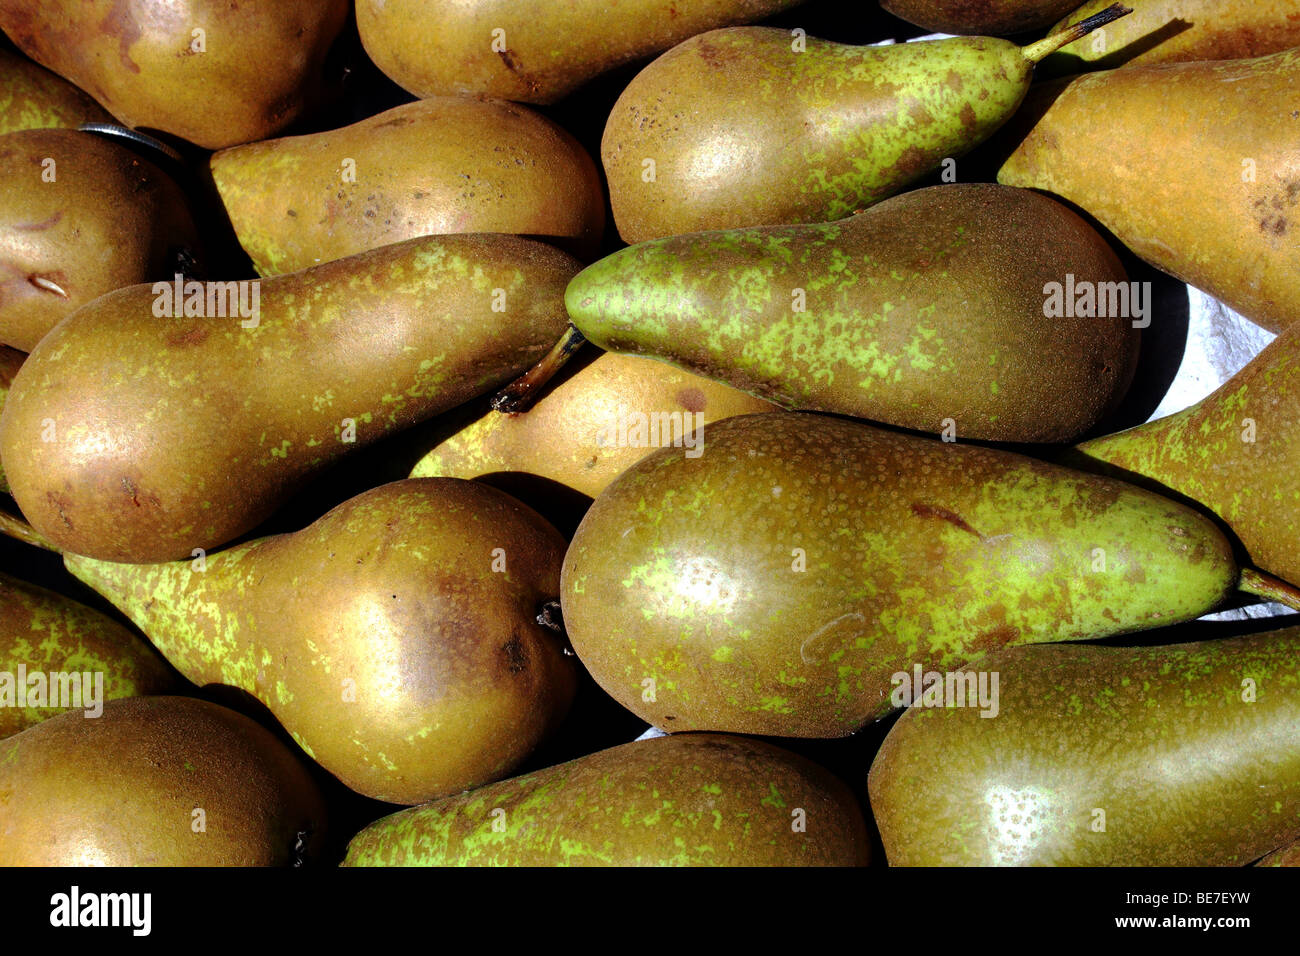 Pears Genus Pyrus Family Rosaceae an edible juicy fruit Stock Photo